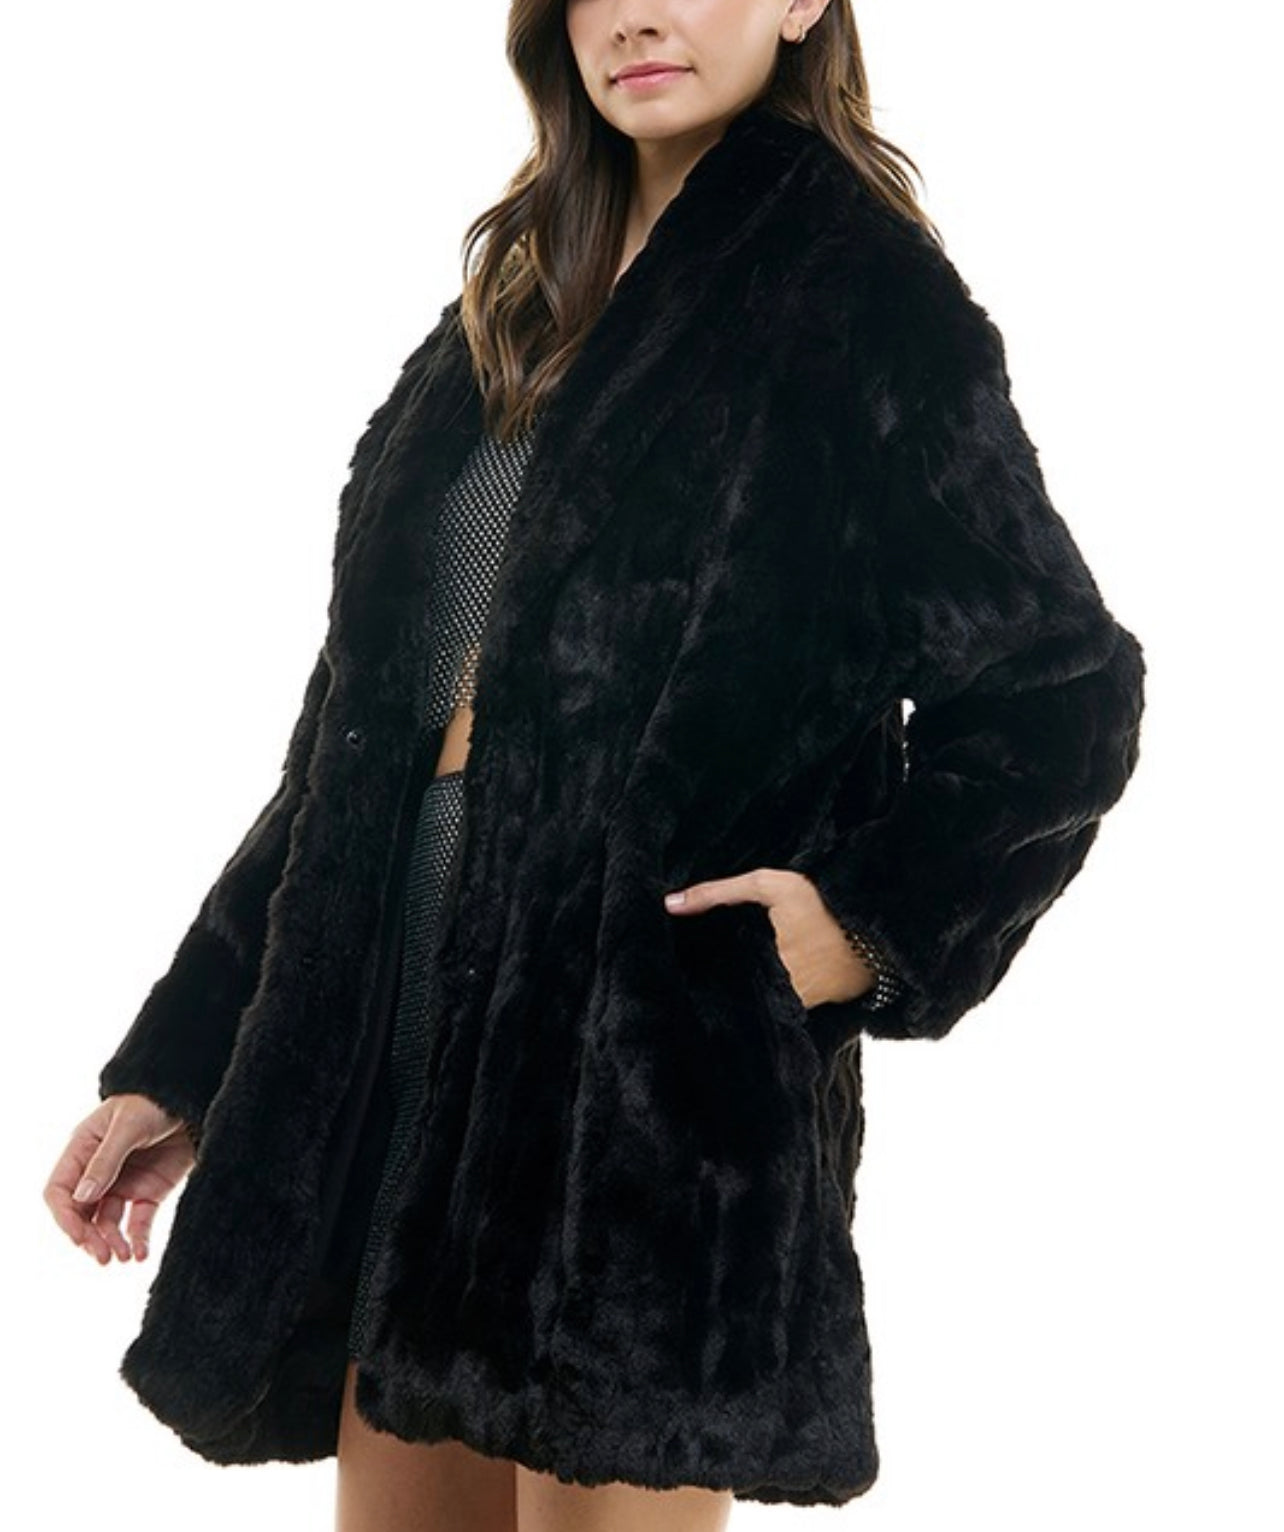 Ritz Black Fur Coat